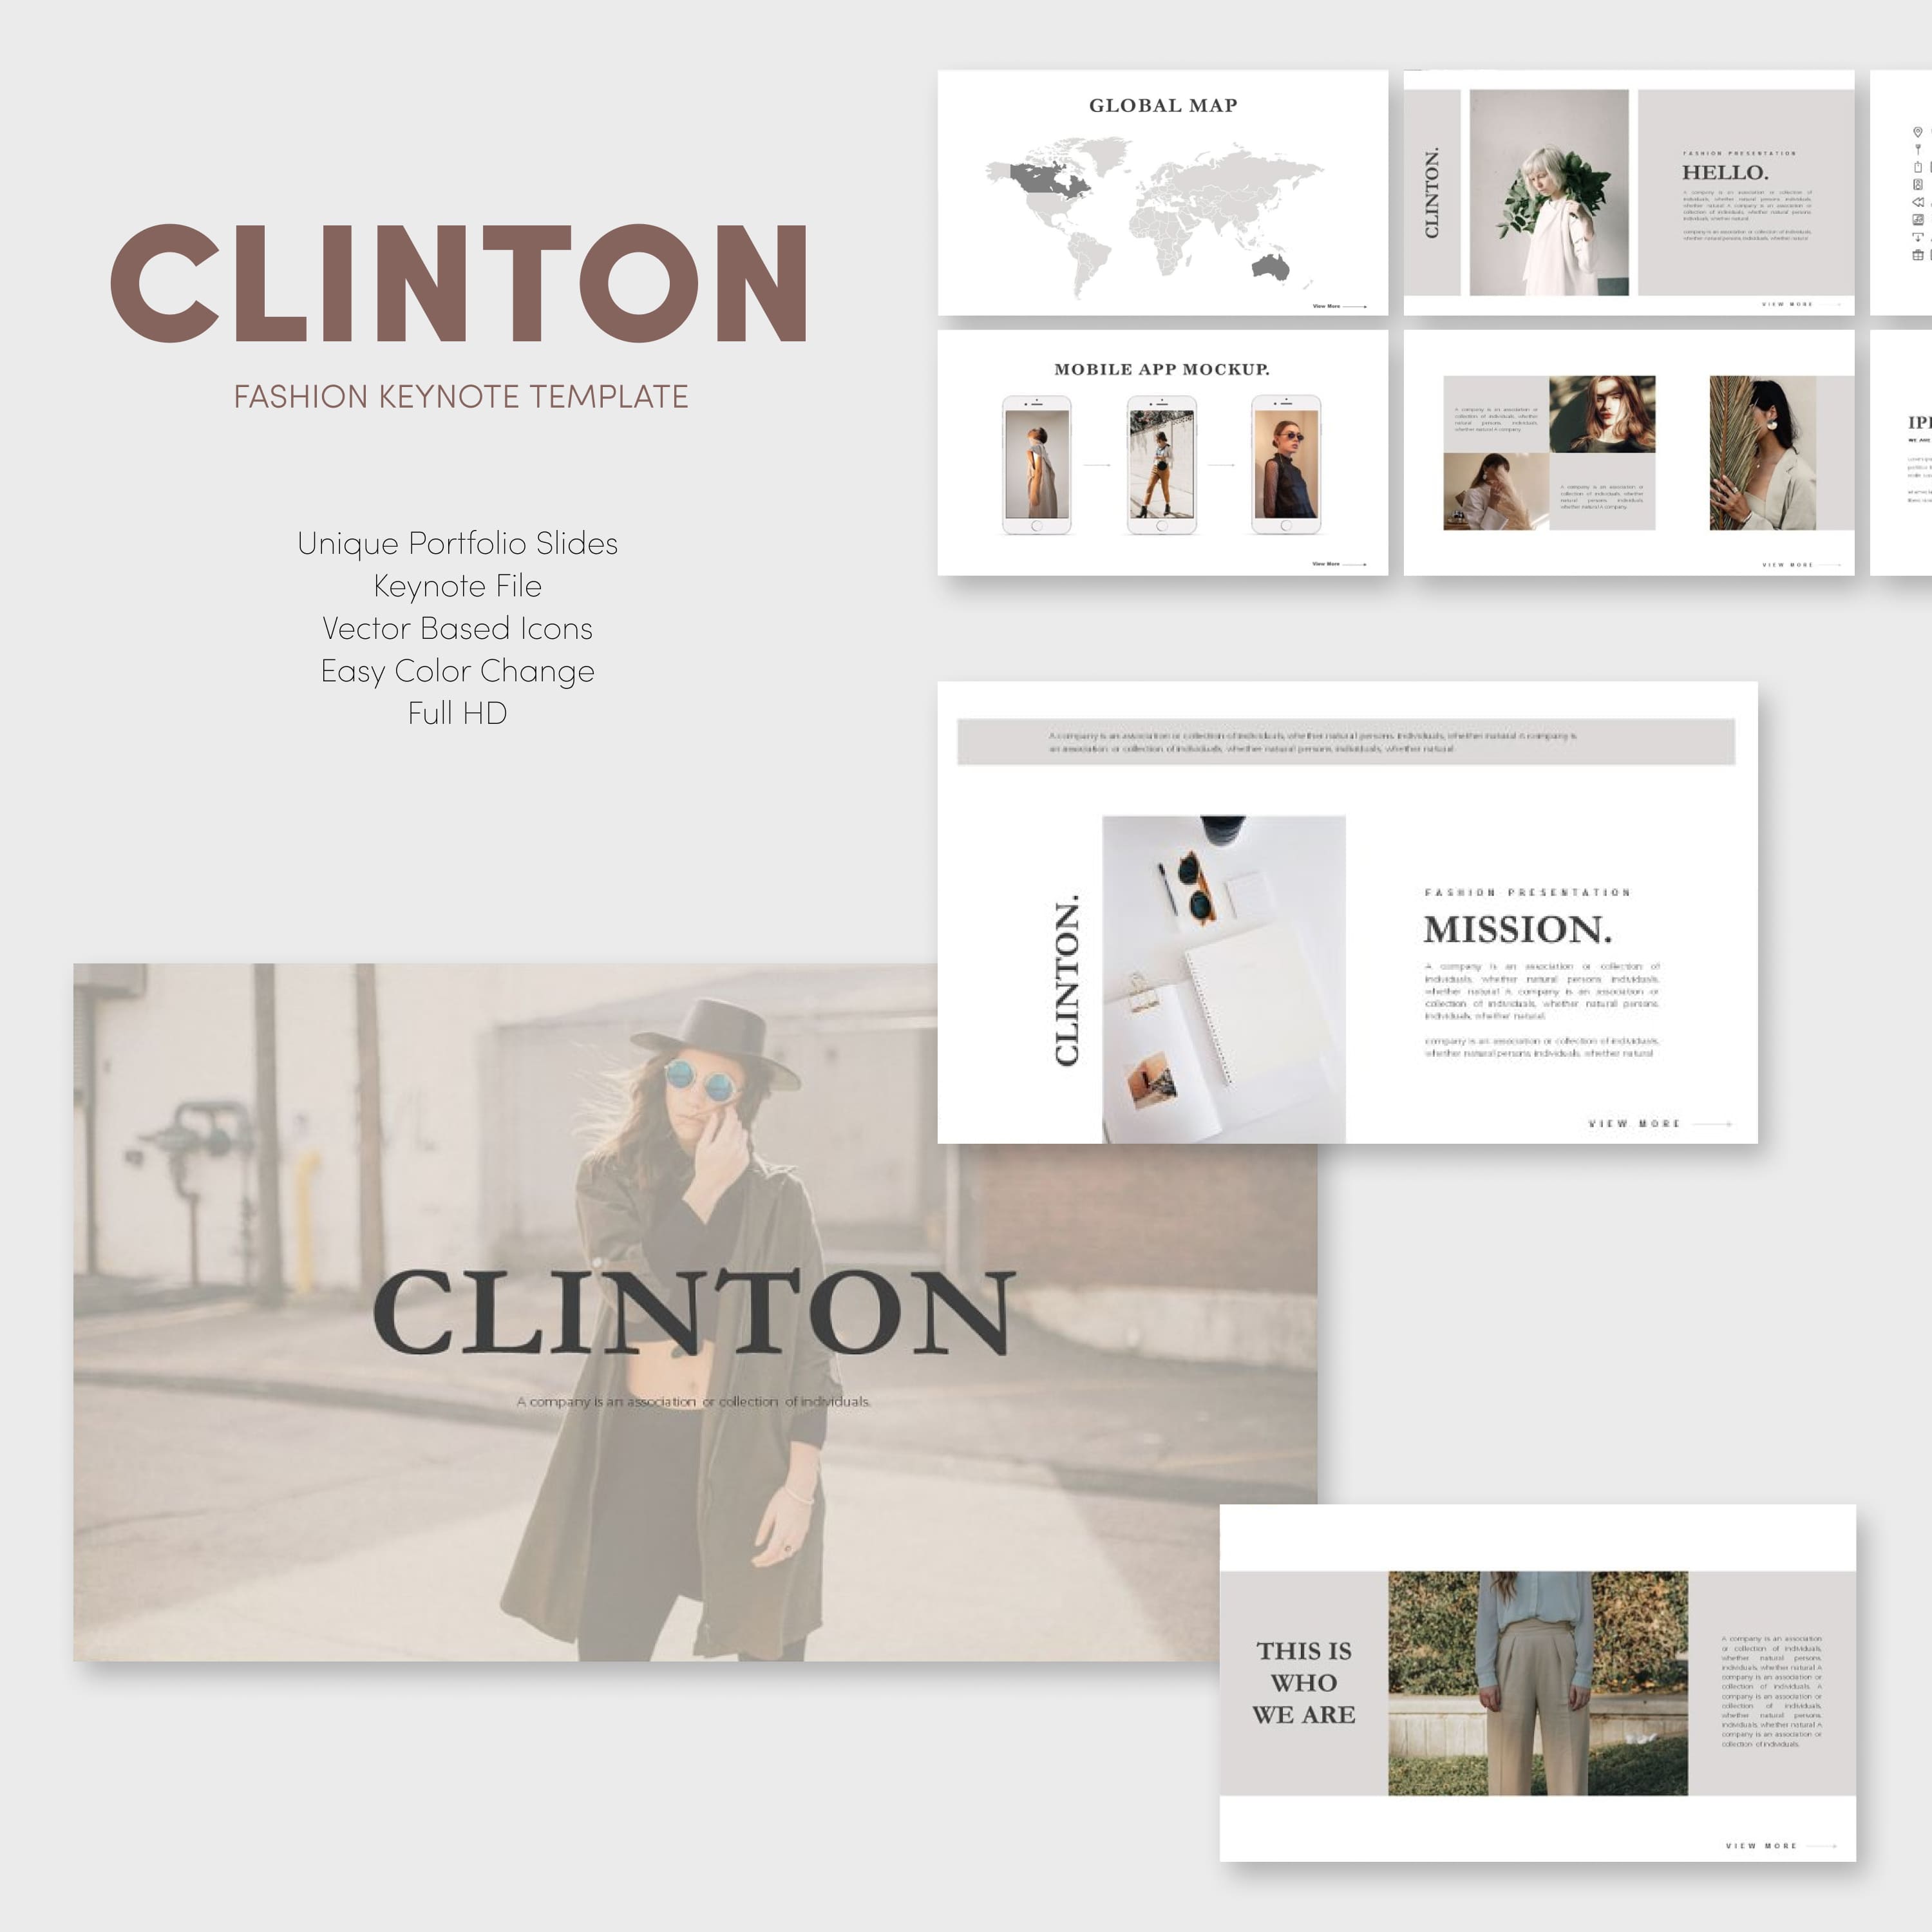 Clinton fashion keynote template - main image preview.